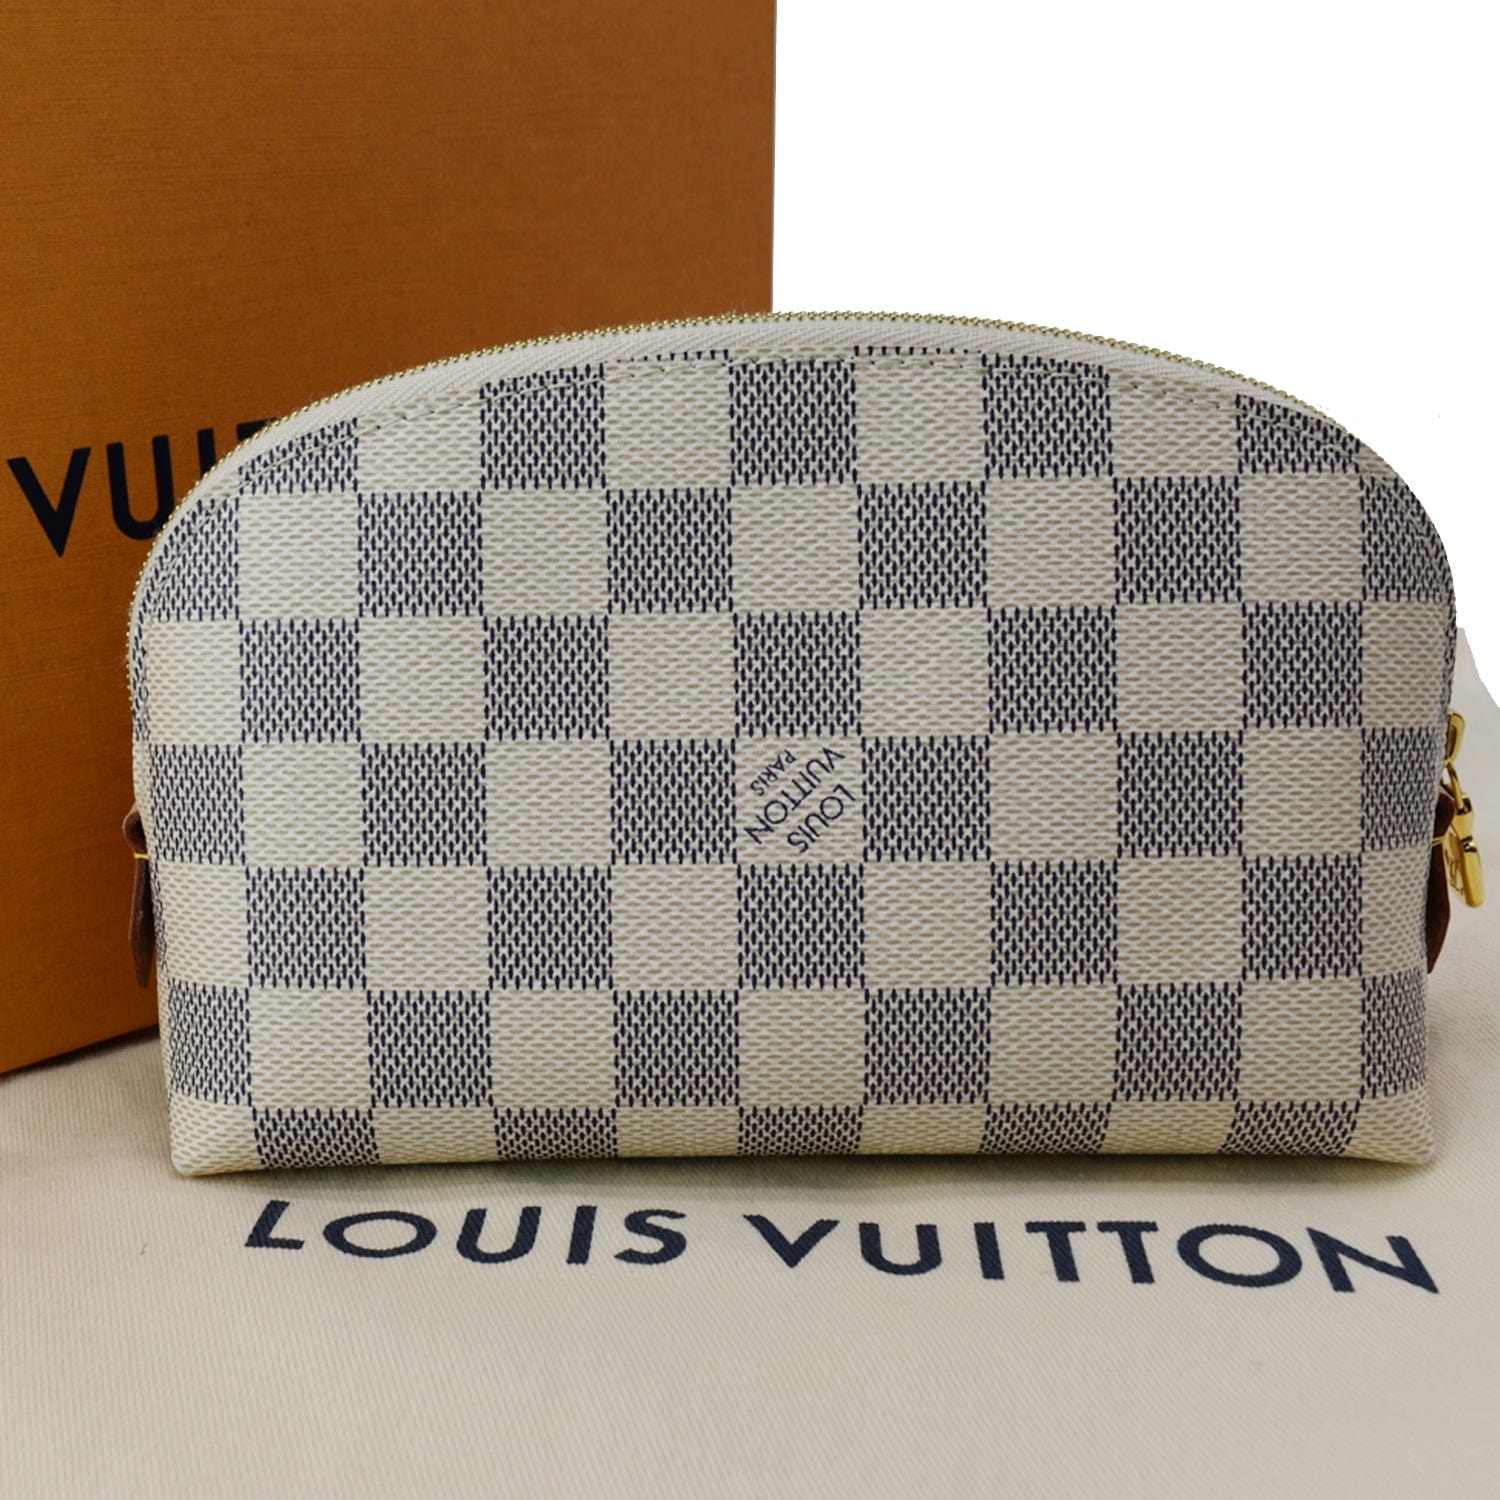 Louis Vuitton 2054 Collection For ผู้ชาย